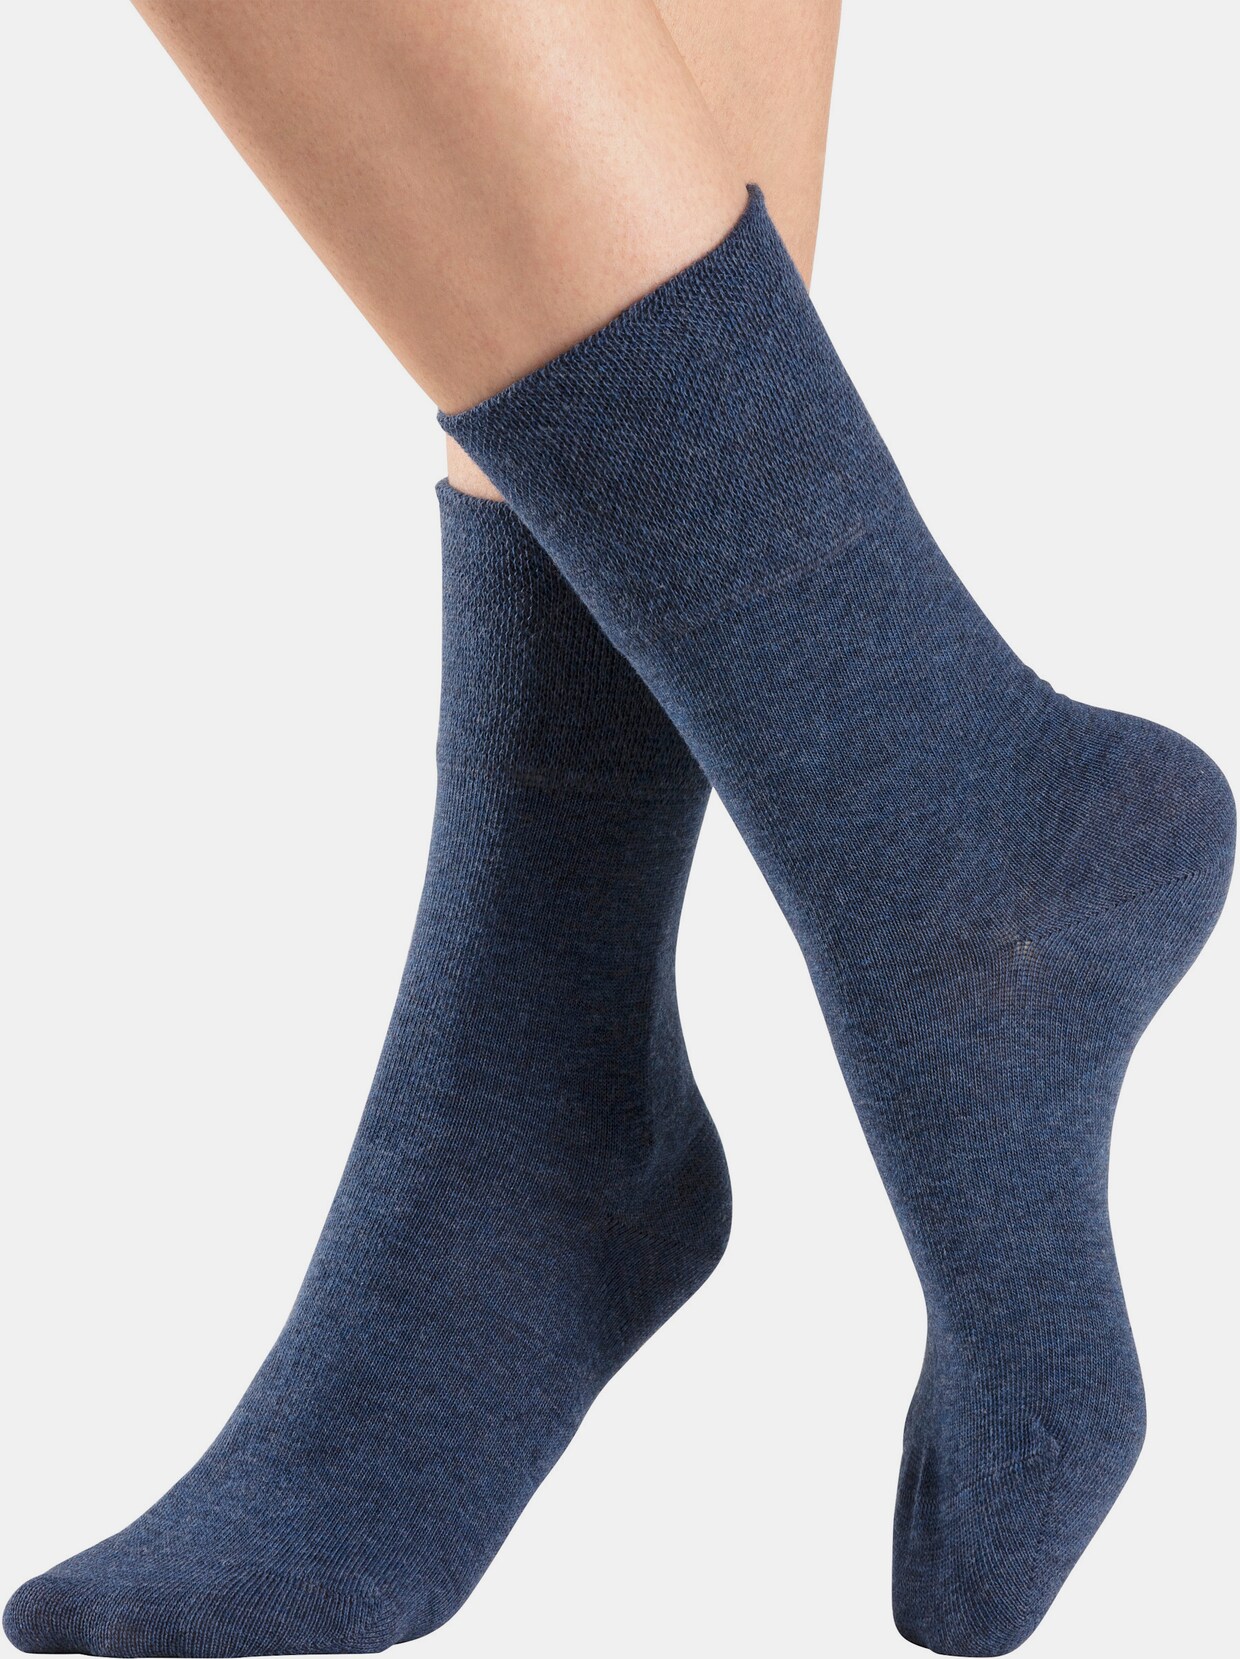 H.I.S Socken - 2x jeans, 2x schwarz, 2x grau-meliert